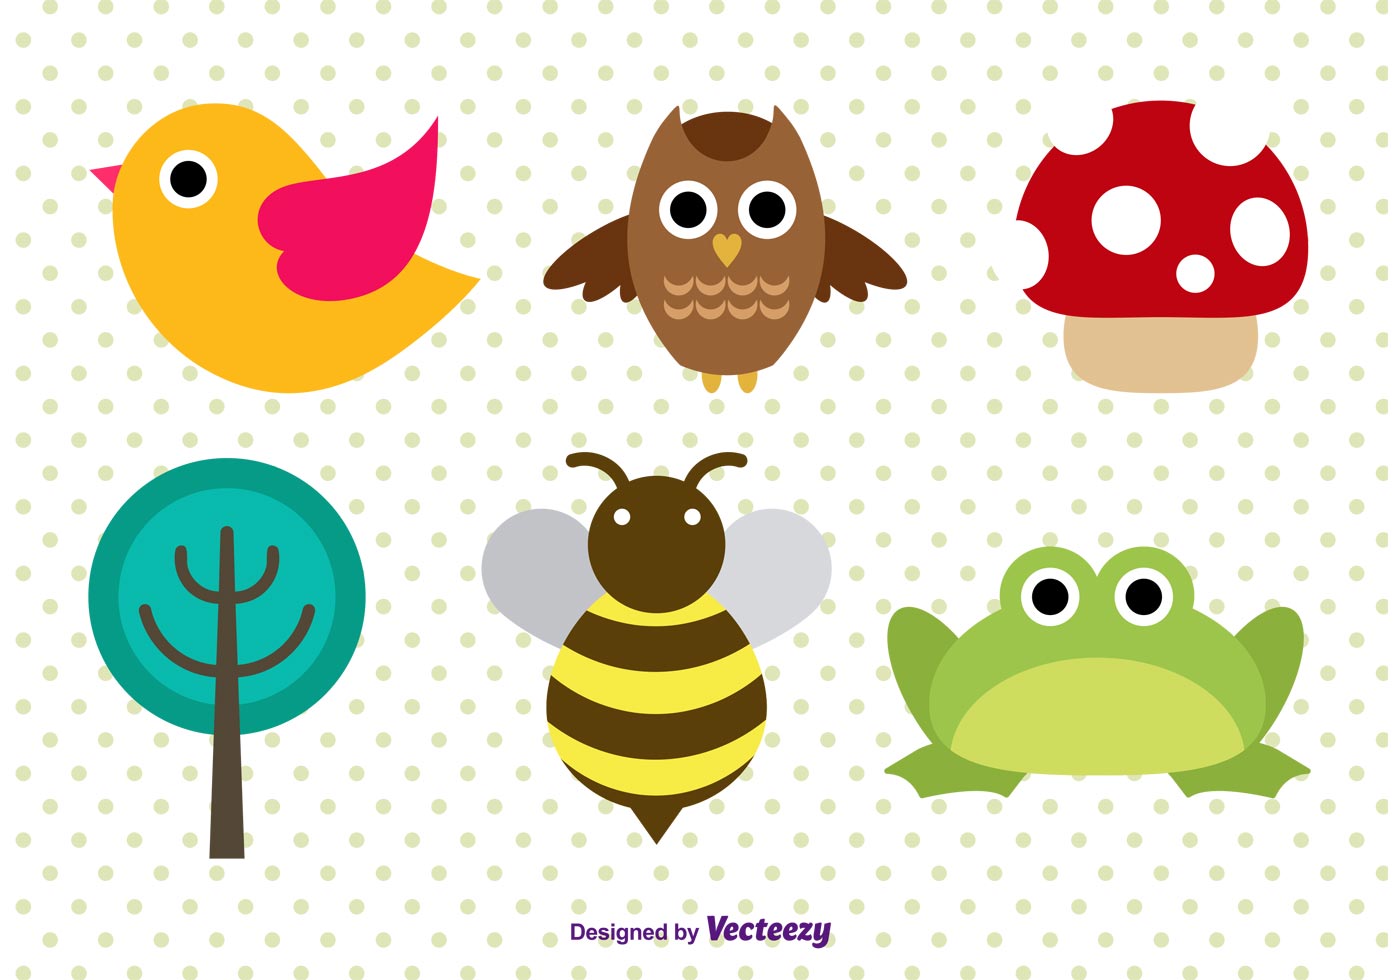 Download Cute Forest Animal Character Vectors - Download Free Vectors, Clipart Graphics & Vector Art